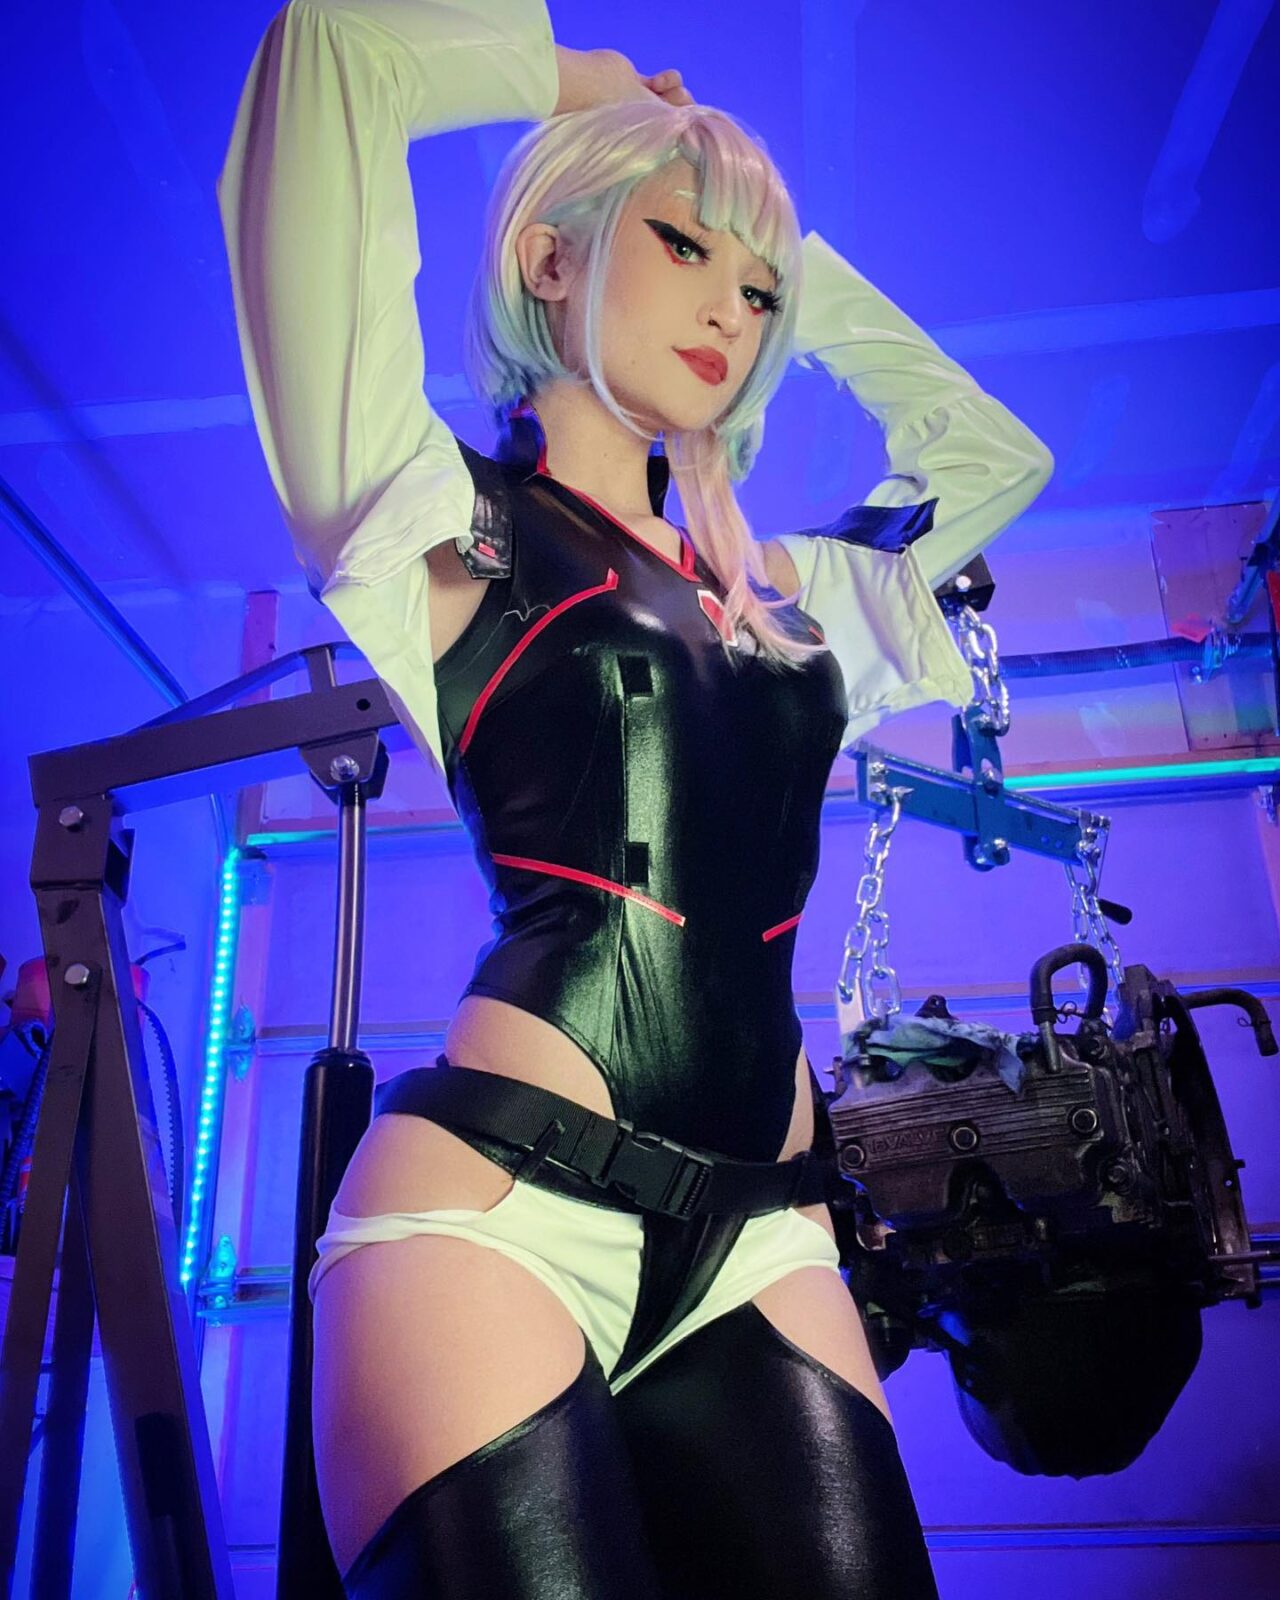 Modelo jane.beeb fez um apaixonante cosplay da Lucy de Cyberpunk